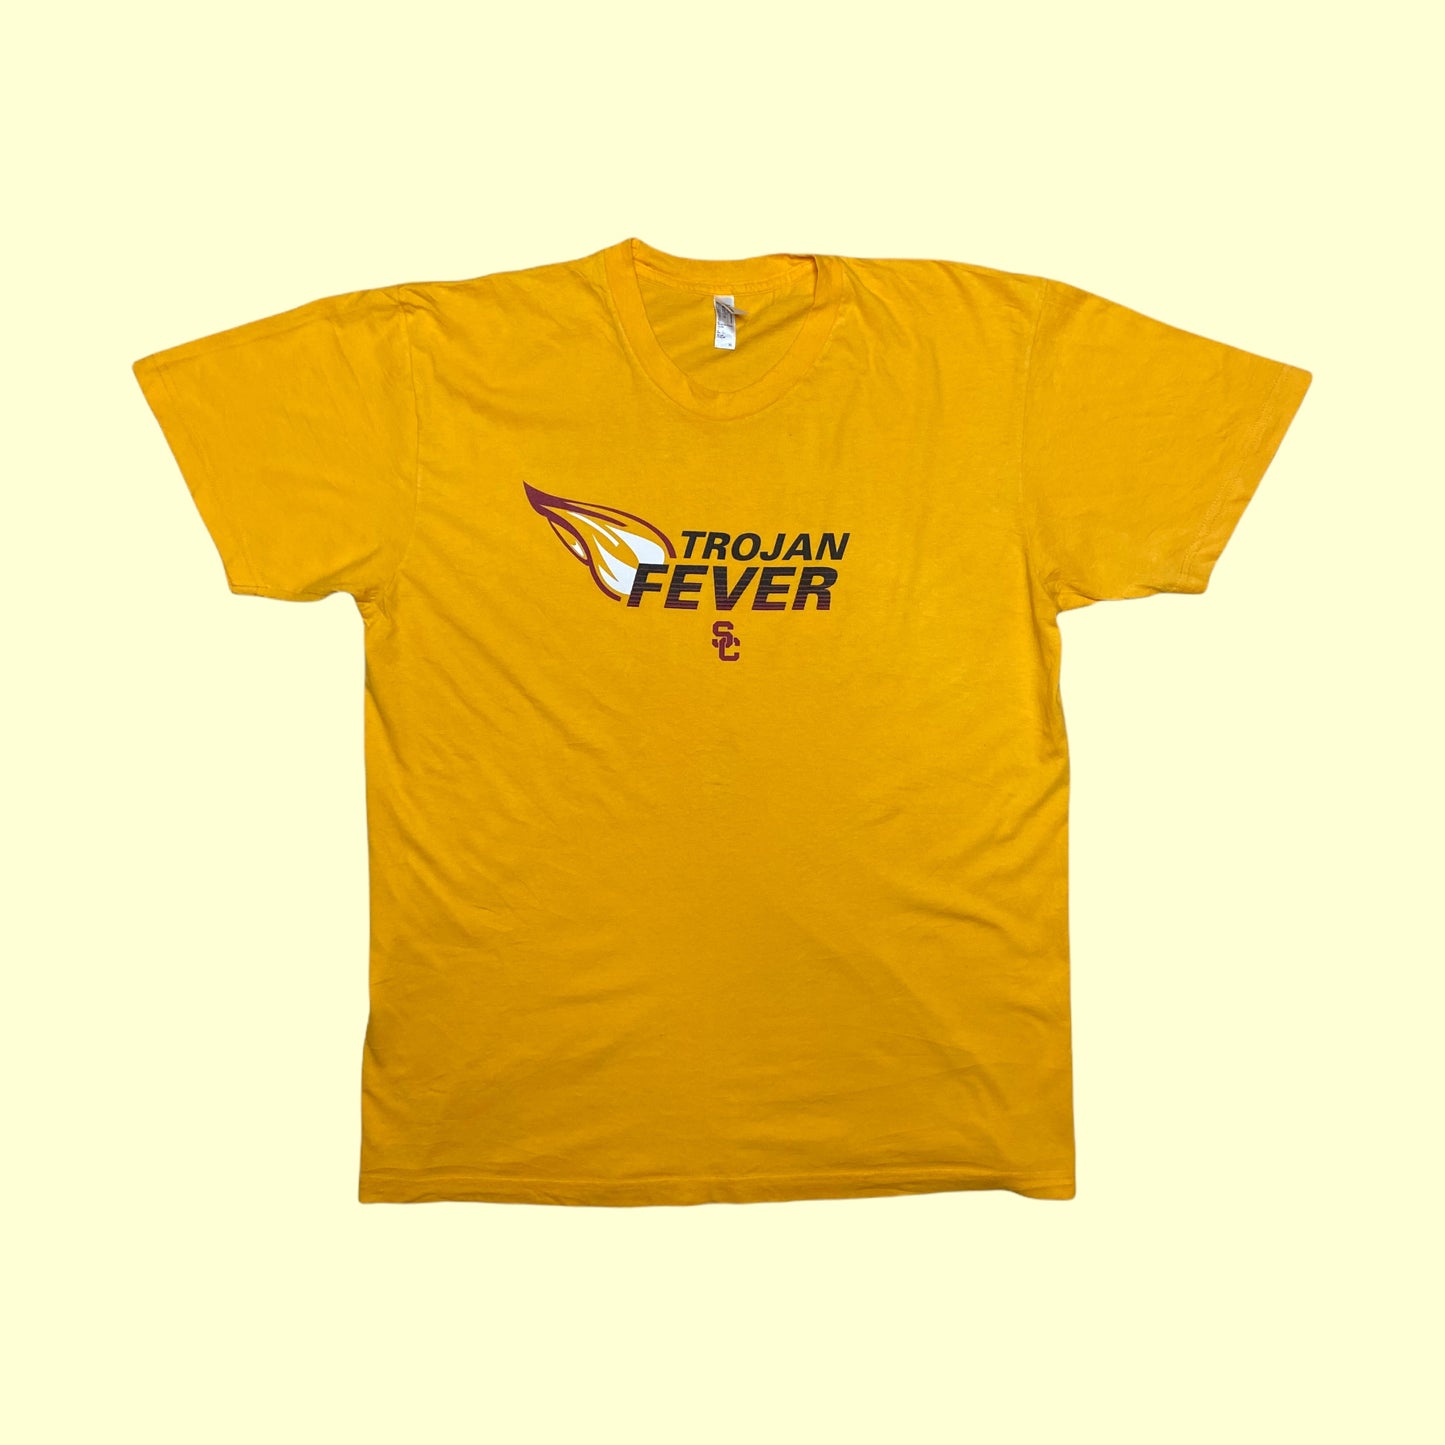 American Apparel Trojans T-Shirt - XL